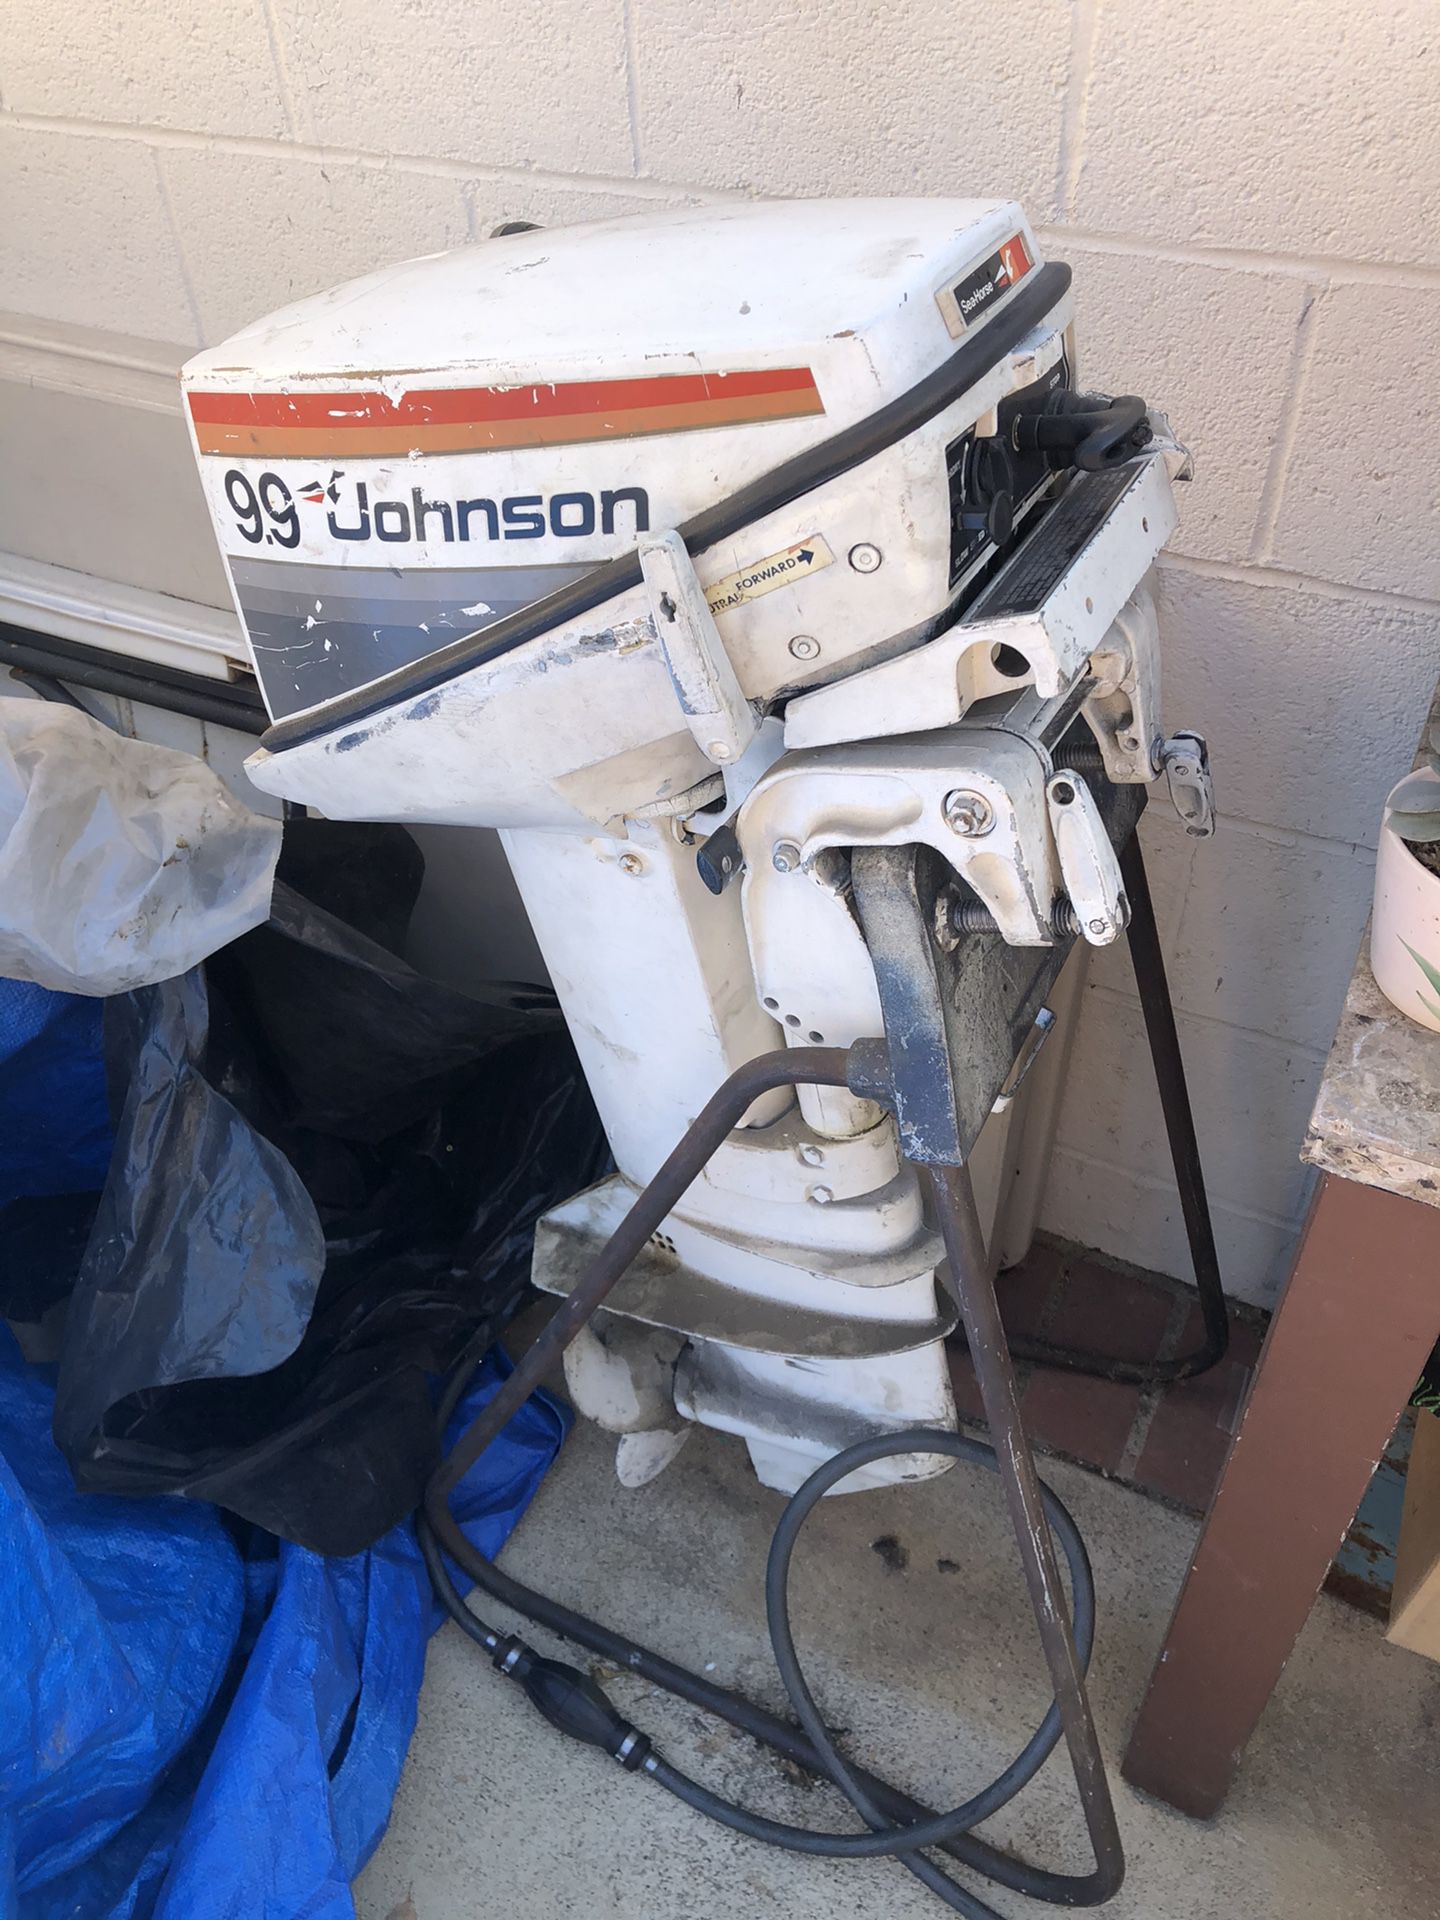 Johnson 9.9 Hp outboard motor